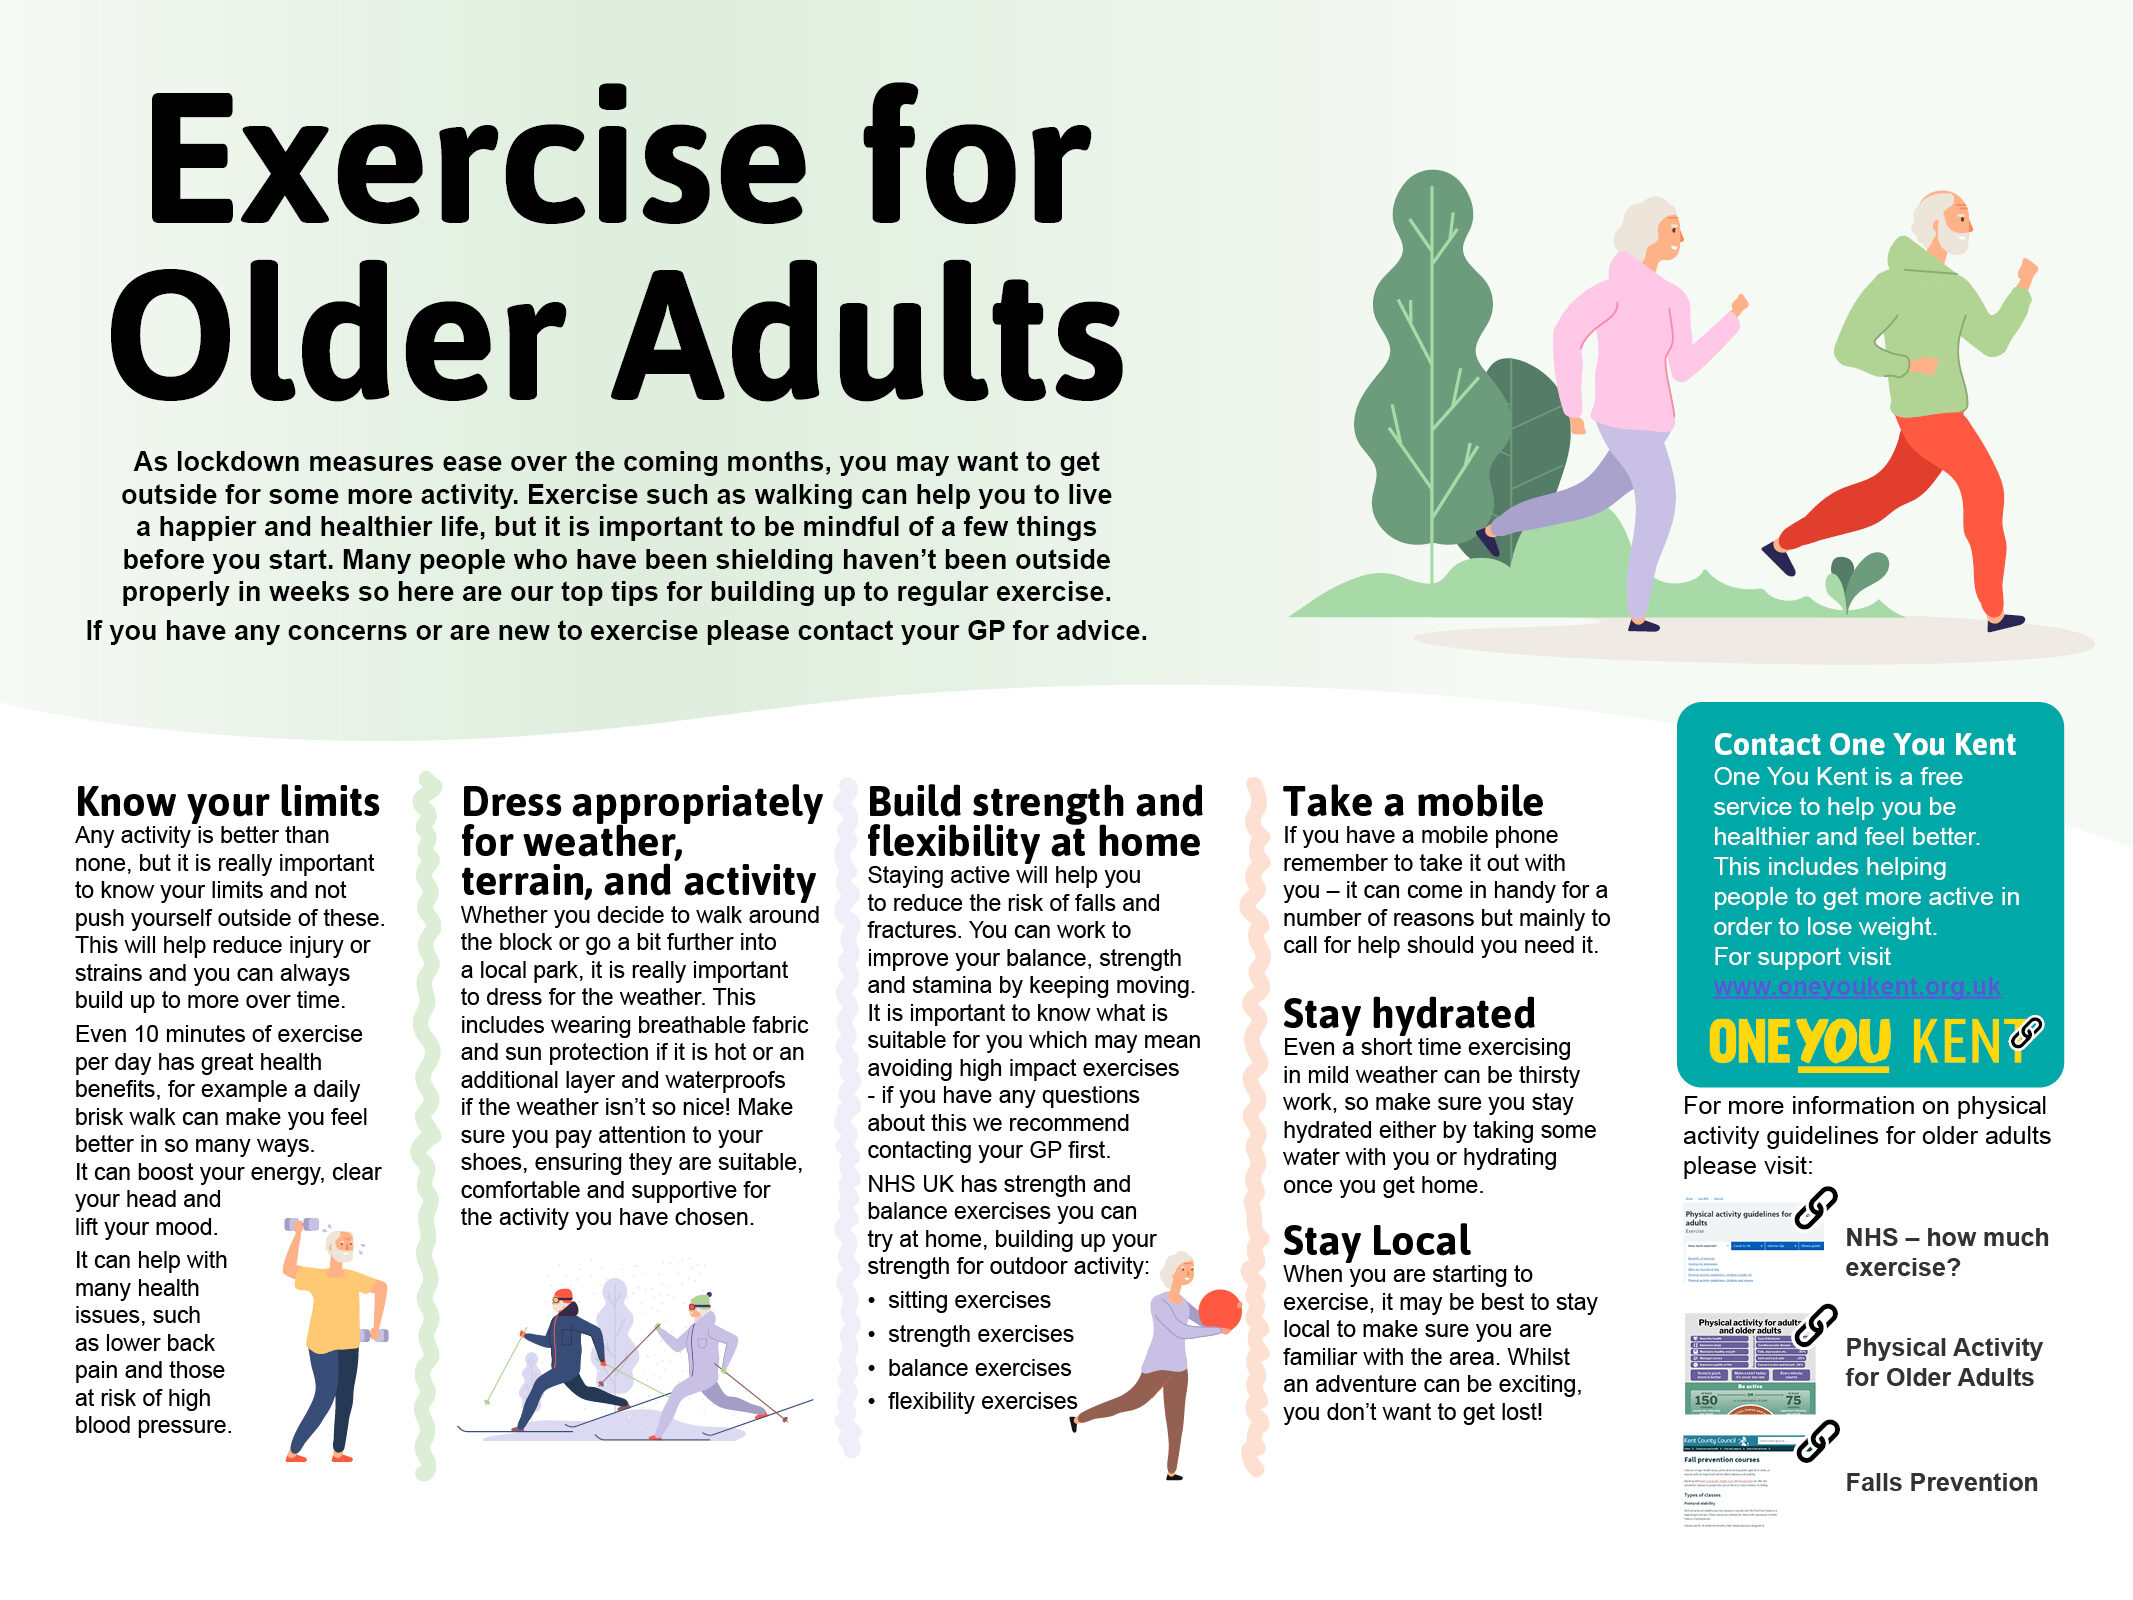 Exercise for Older Adults - Cranbrook & Sissinghurst Parish Council